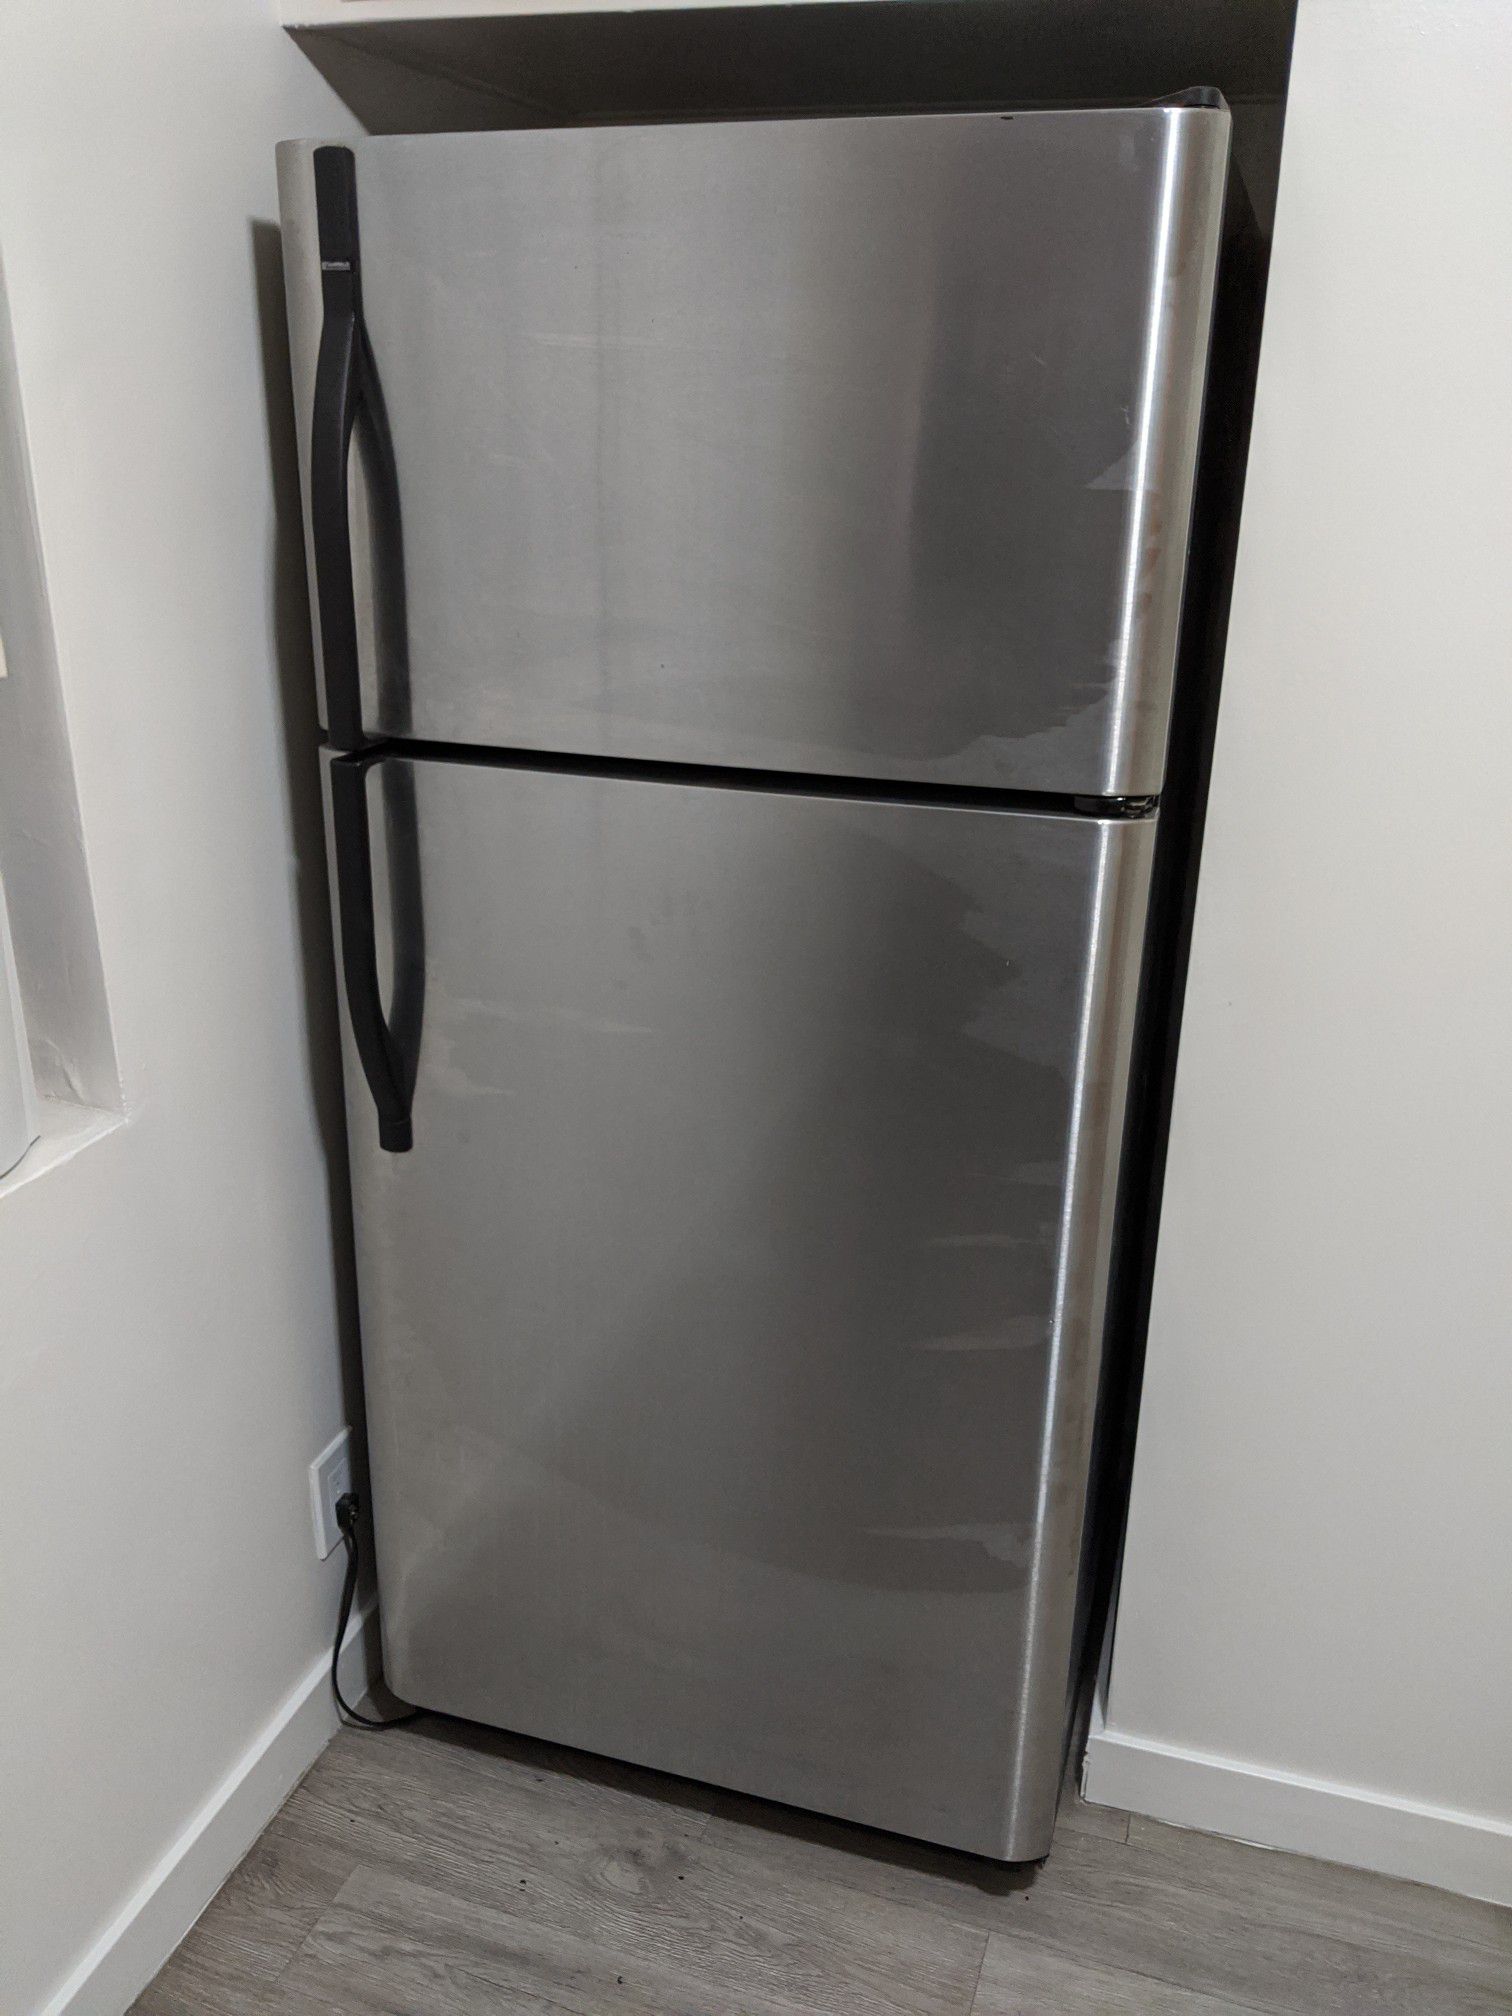 Kenmore stainless steel fridge